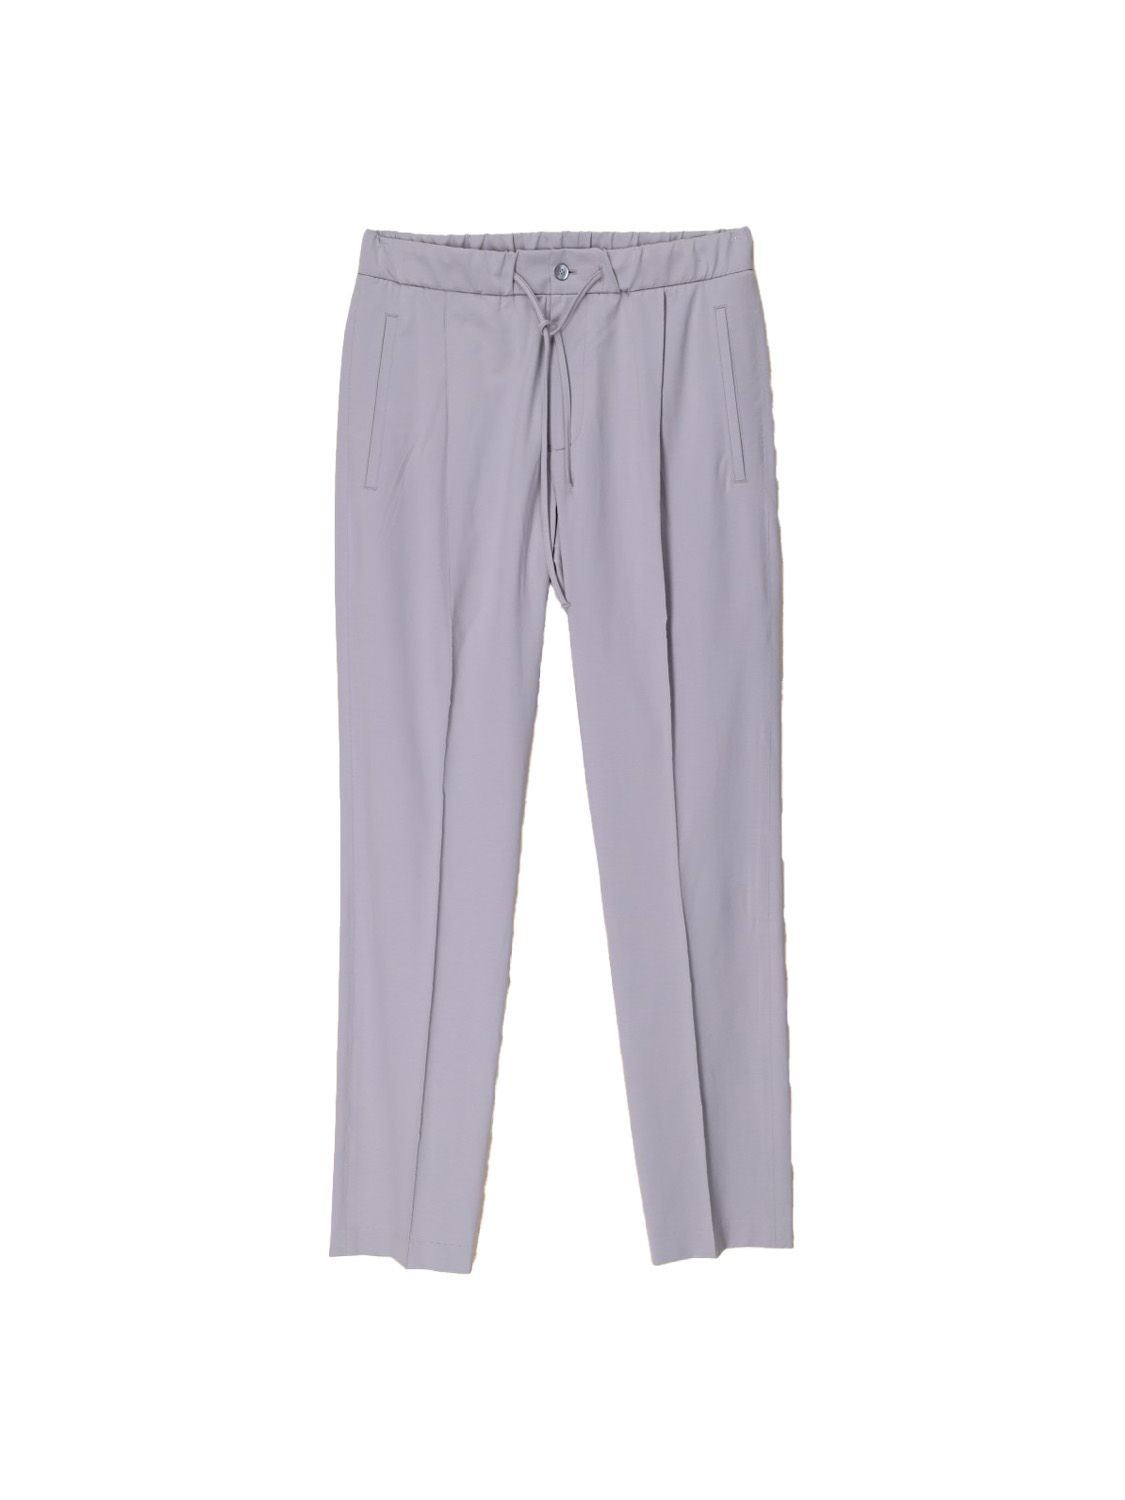 Jacob Super – stretchy cotton trousers 